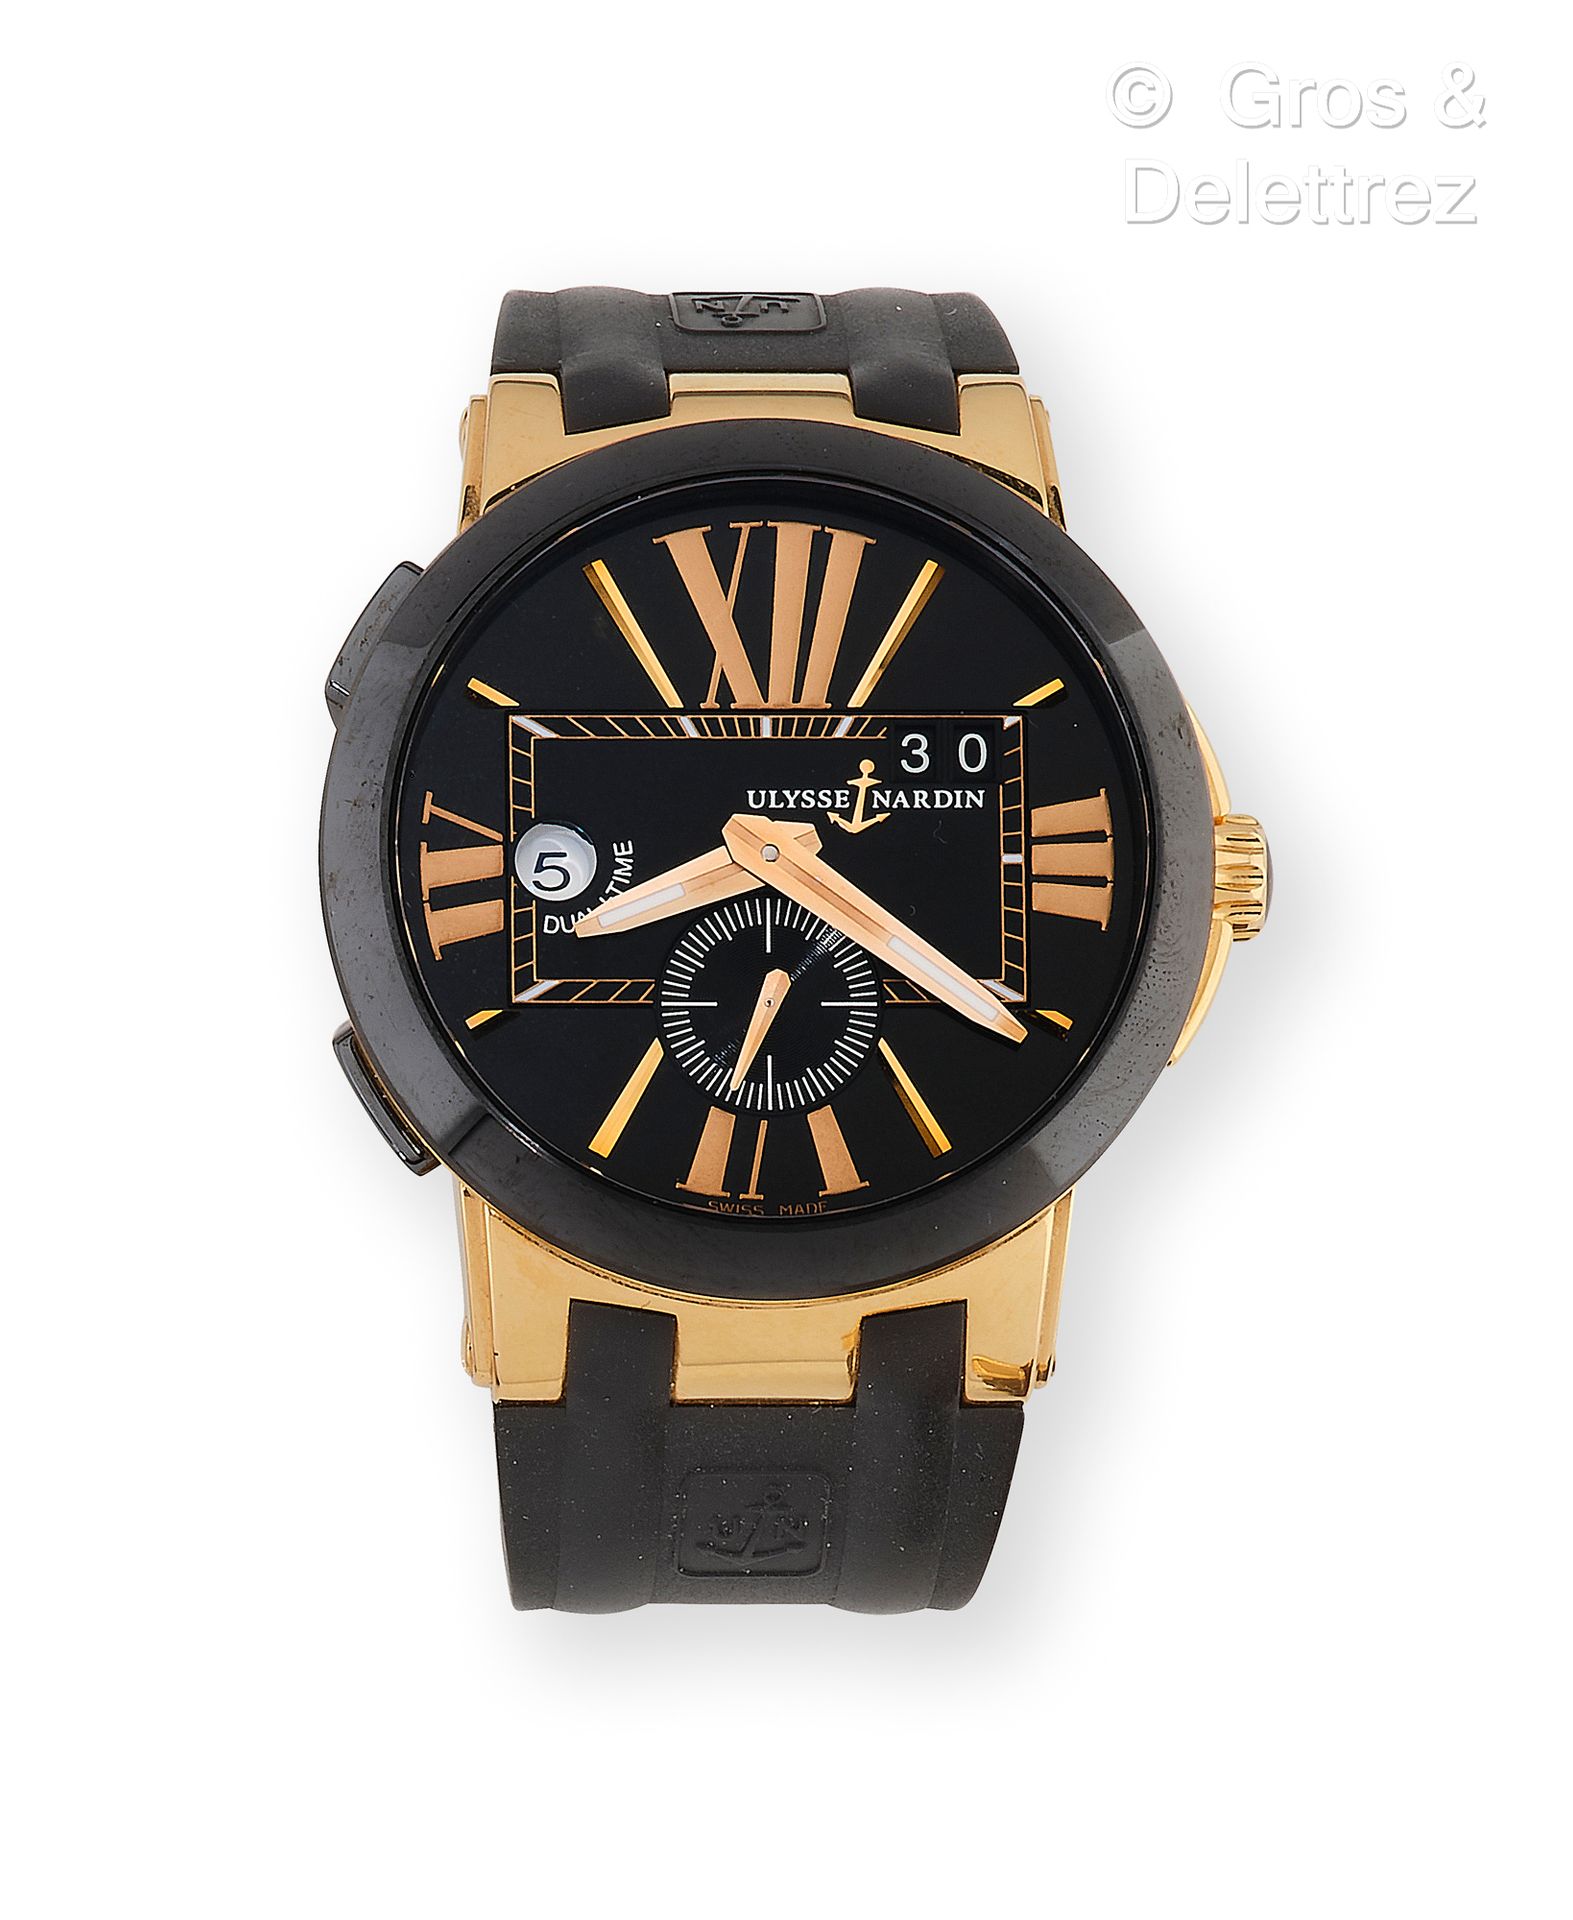 ULYSSE NARDIN "Dual Time" watch - Large bracelet watch in yellow gold. Round cas&hellip;